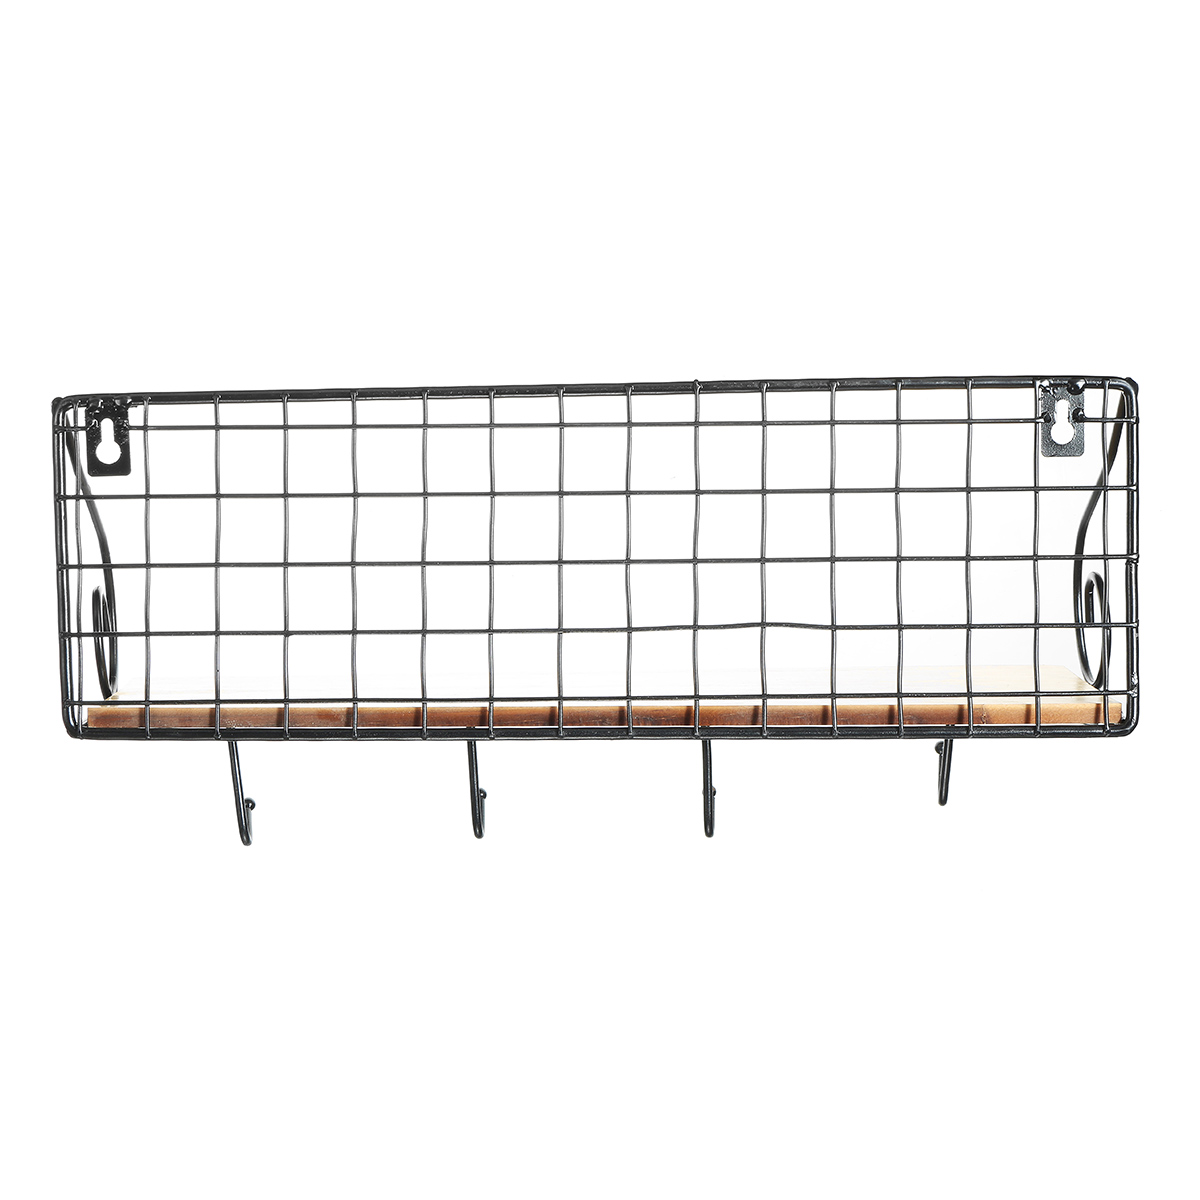 Hanging-Wall-Mounted-Rack-Storage-Organizer-Wood-Home-Display-Storage-Baskets-w-Iron-Hook-1517311-6